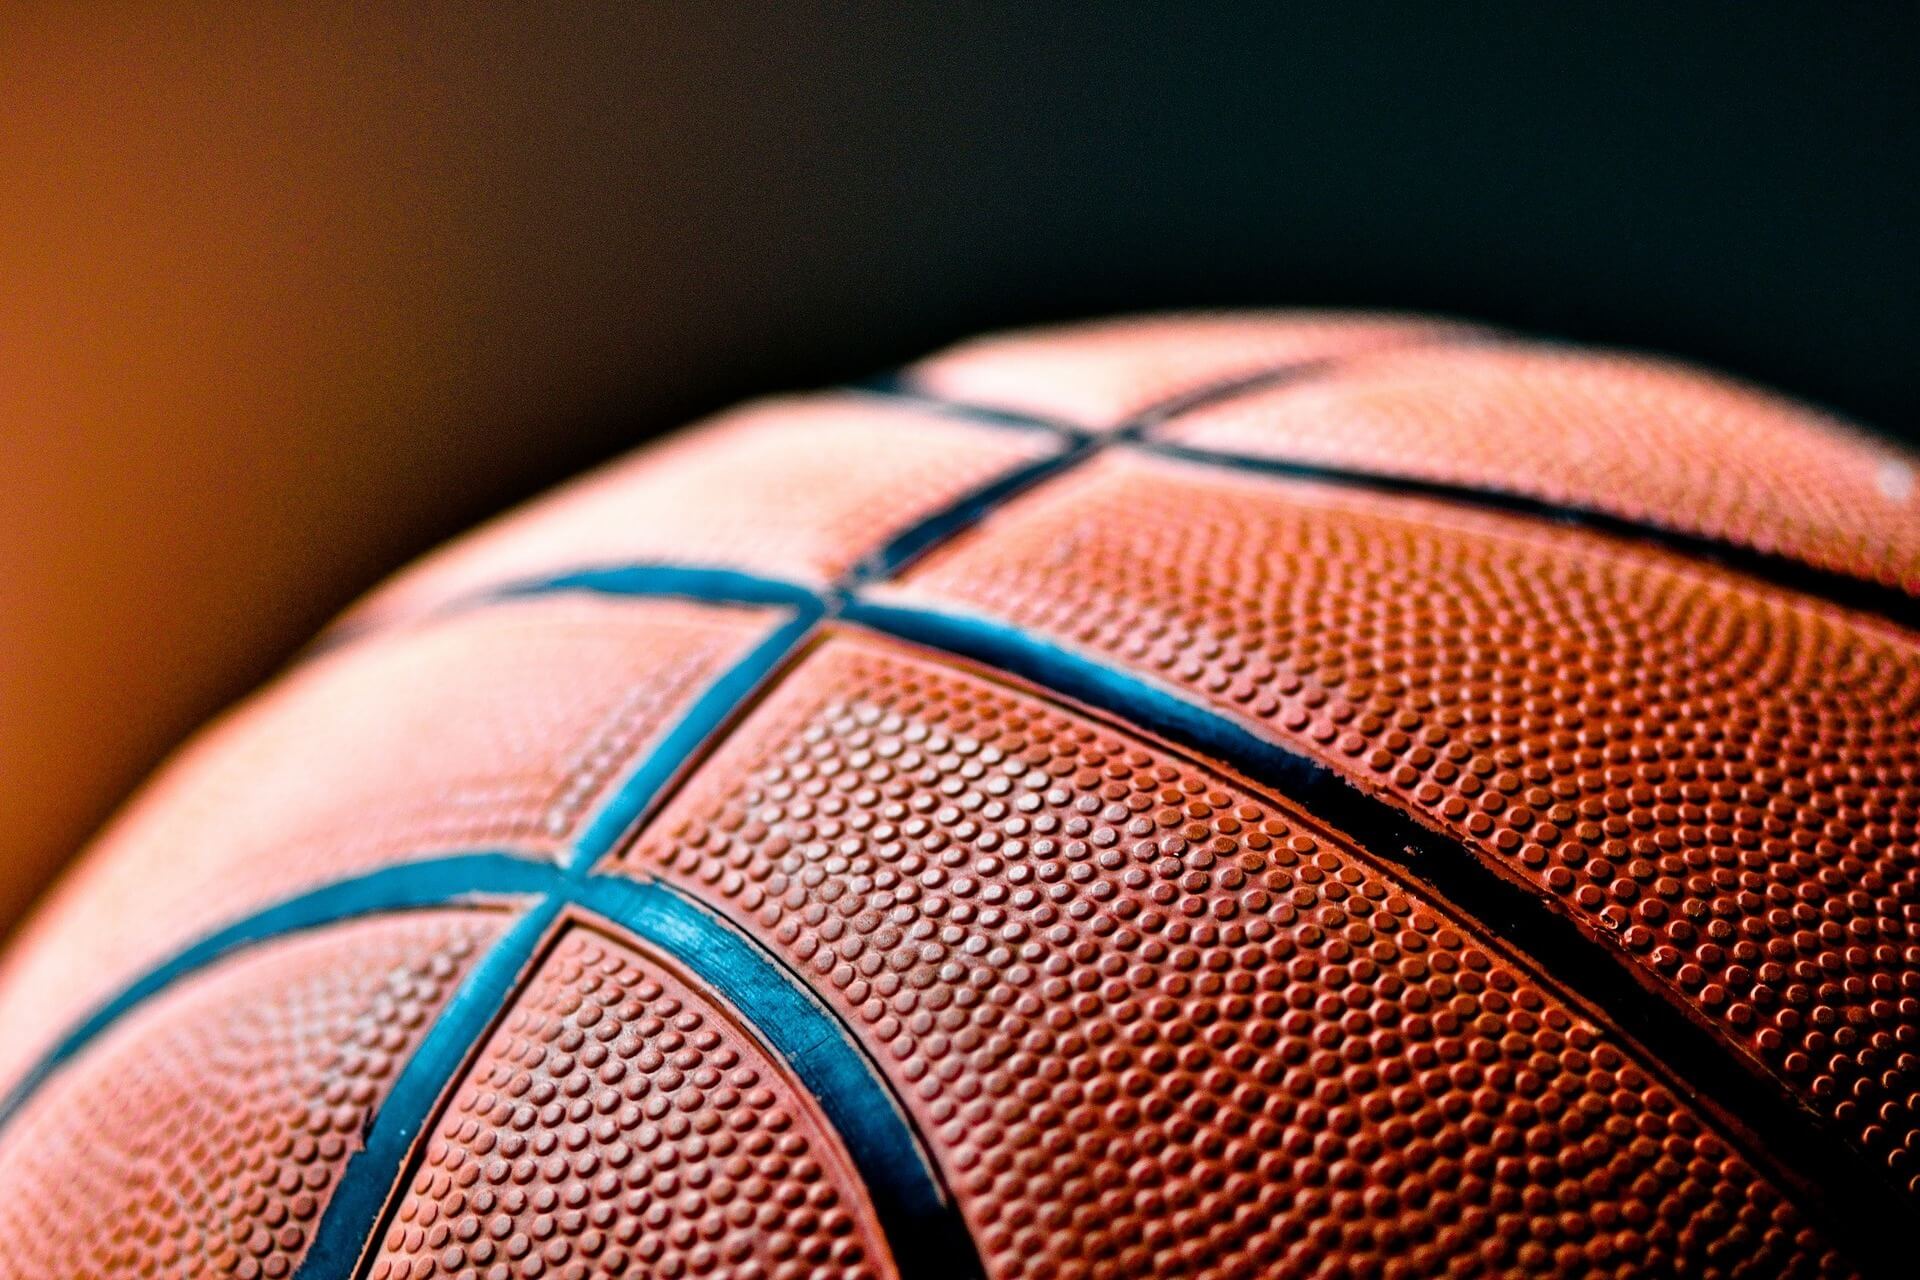 A close-up of a basketball.